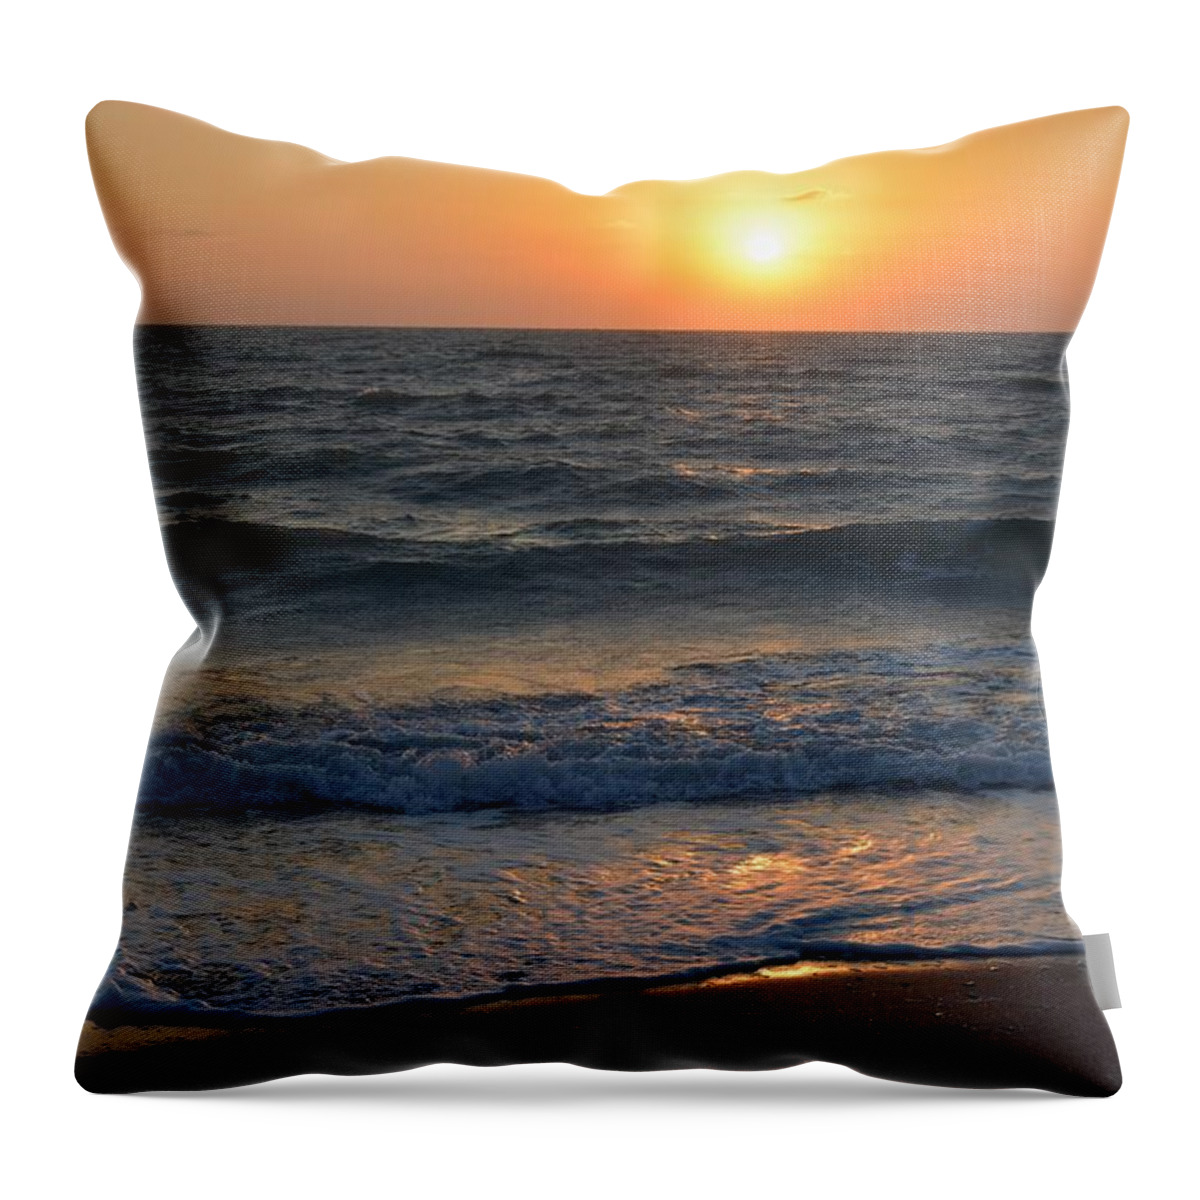 Glistening Sunset Throw Pillow featuring the photograph Sun Glistening on the Water by Patricia Twardzik